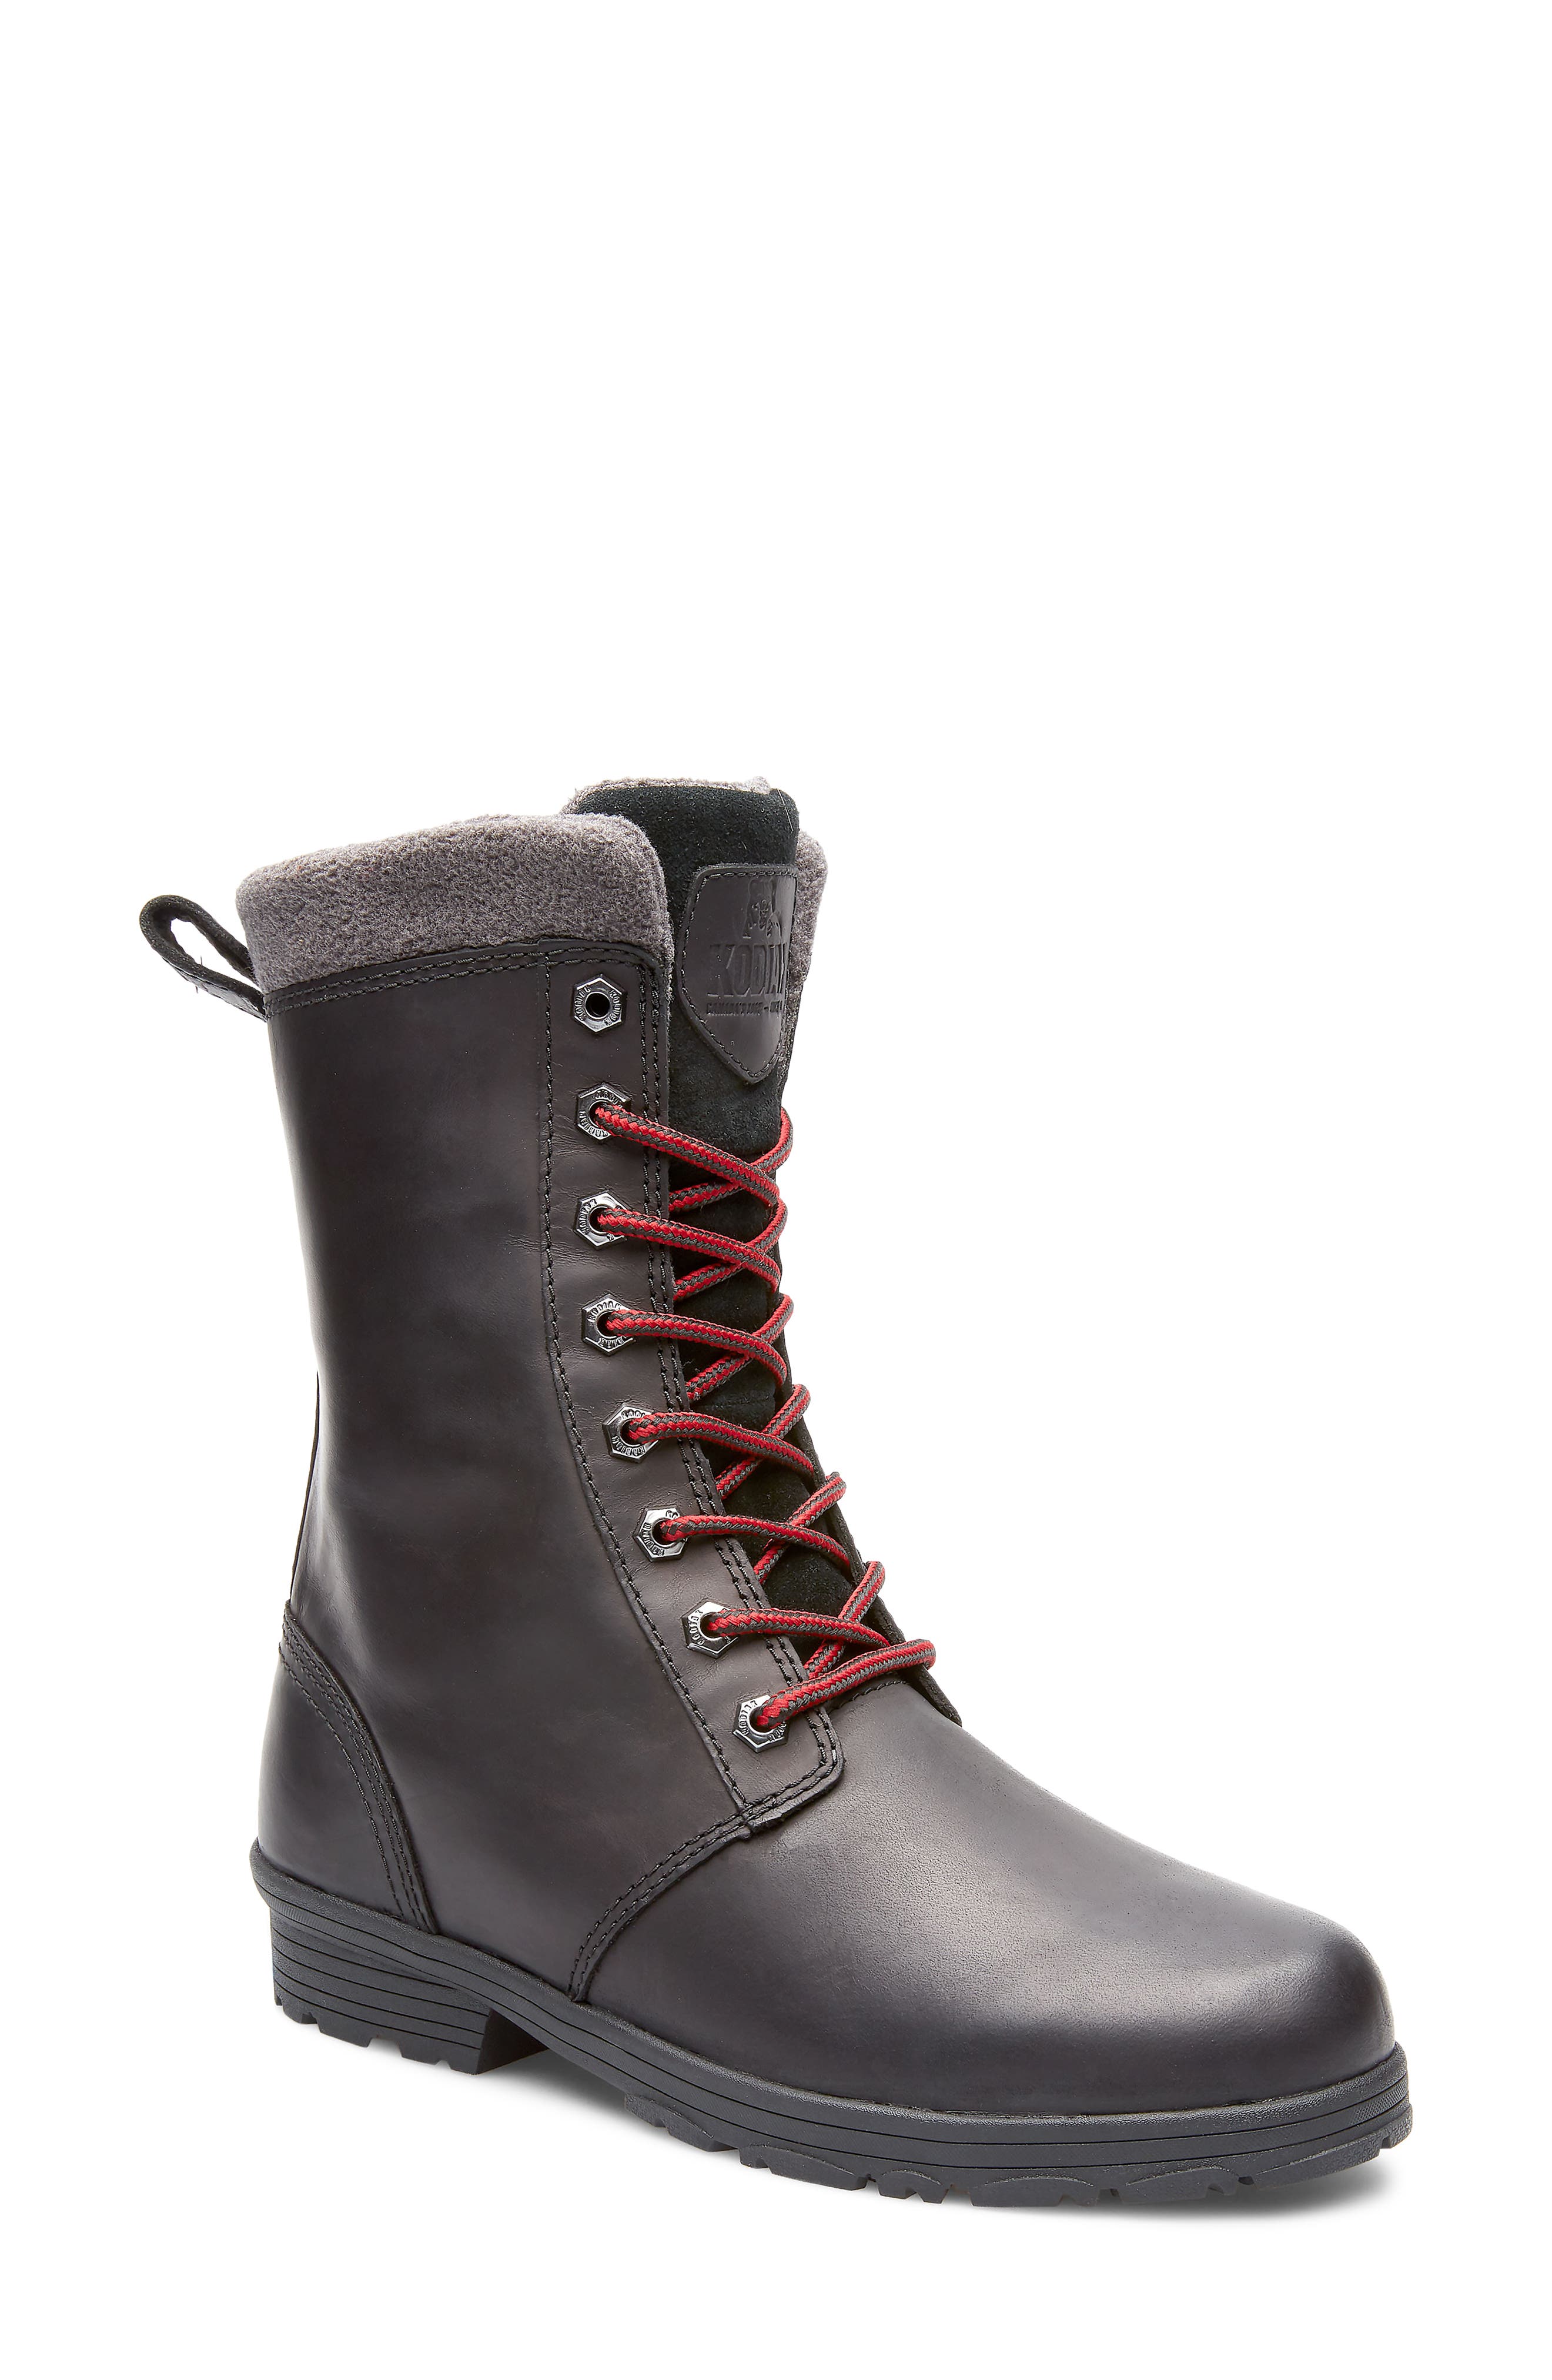 kodiak women's winter boots